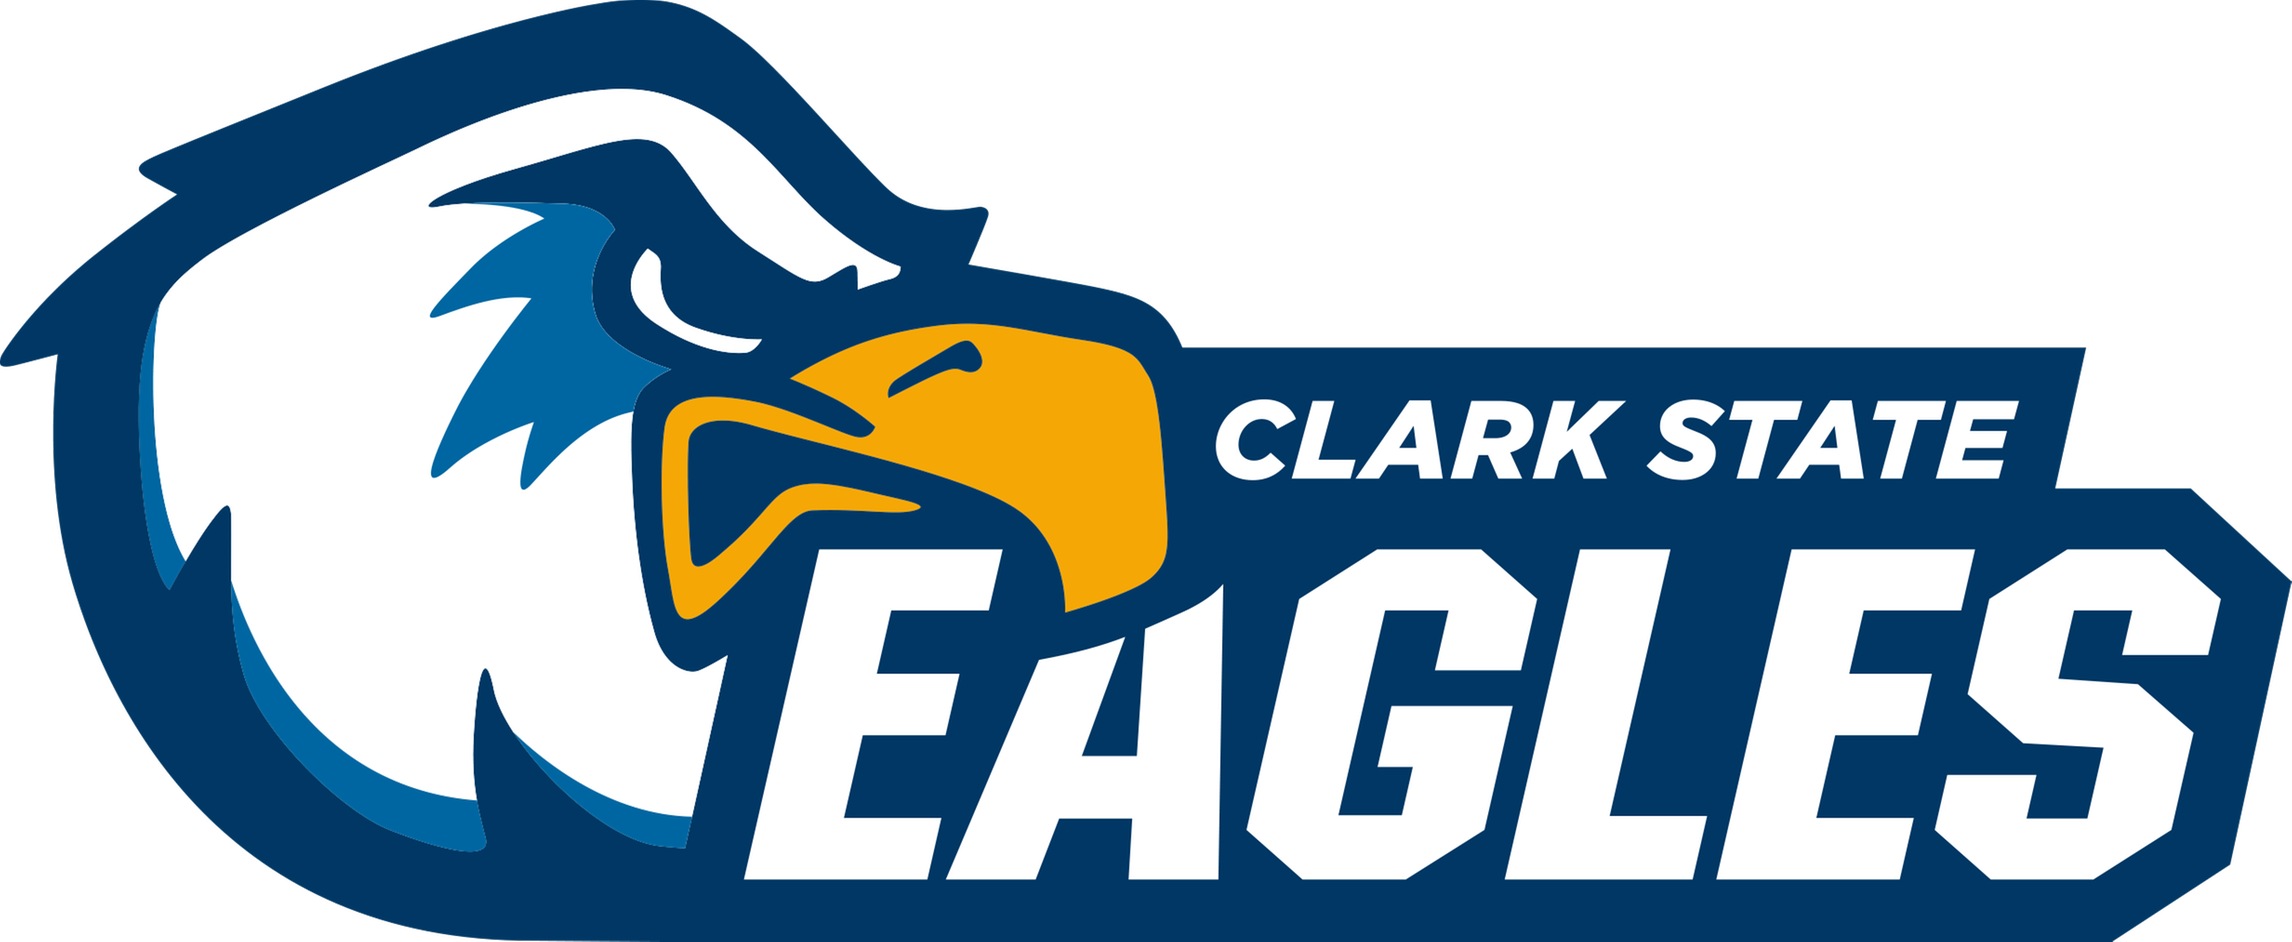 Clark State CC logo